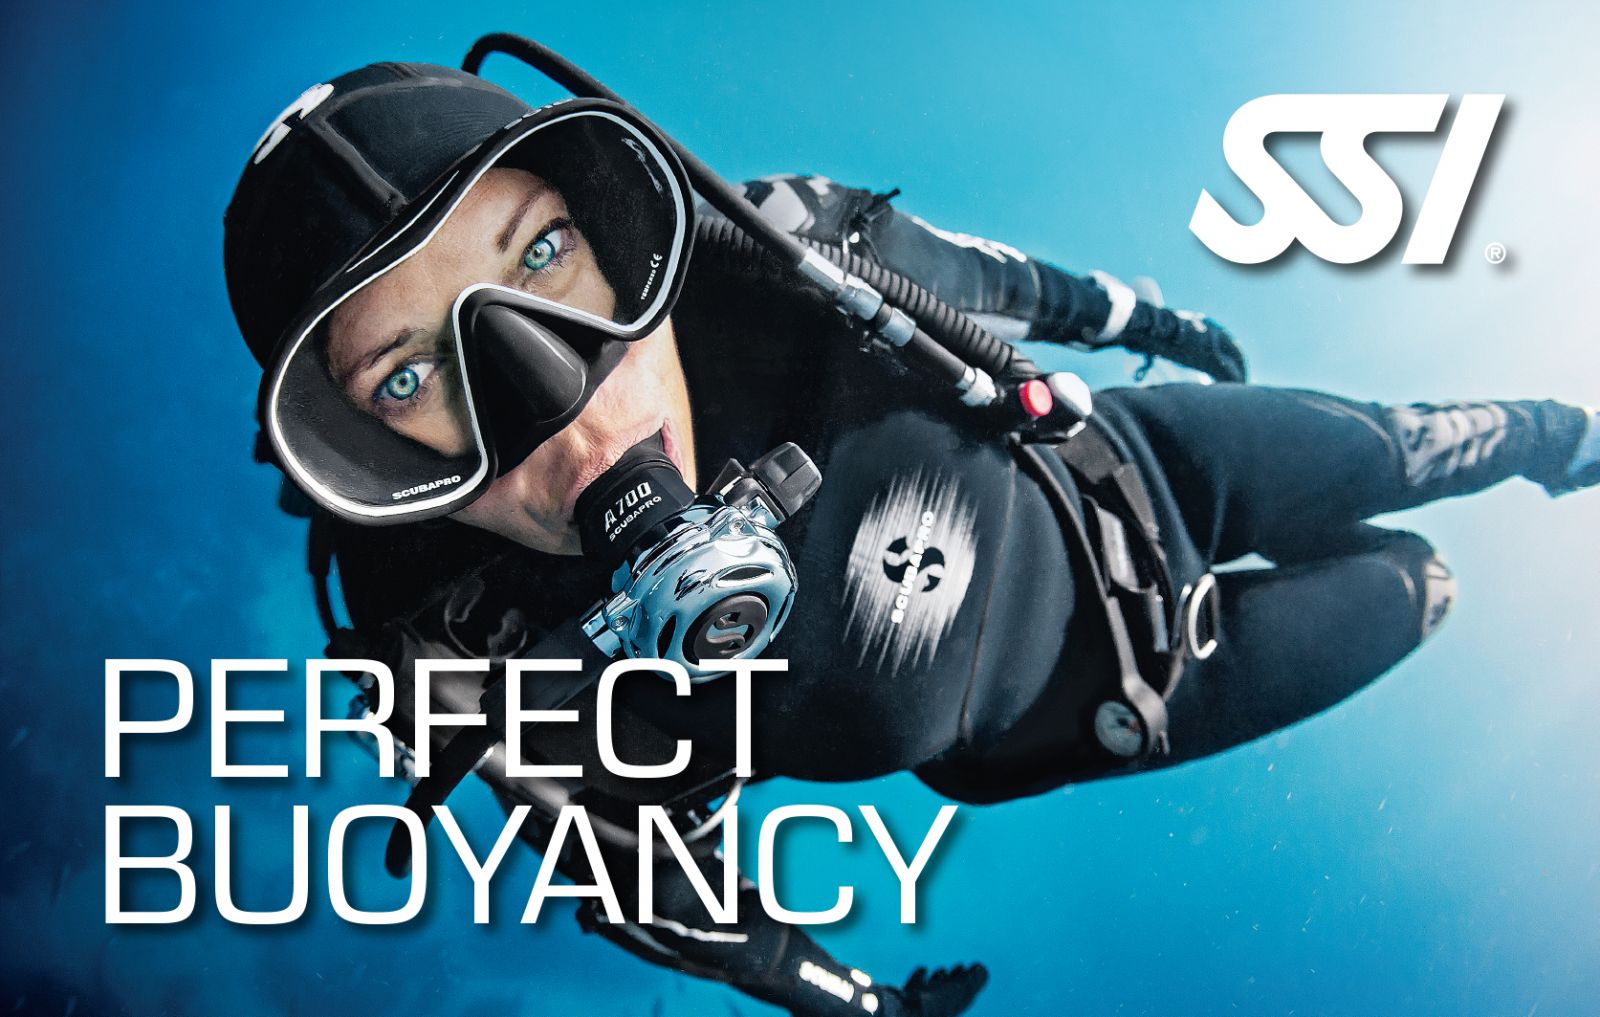 ssi-perfect-buoyancy-2